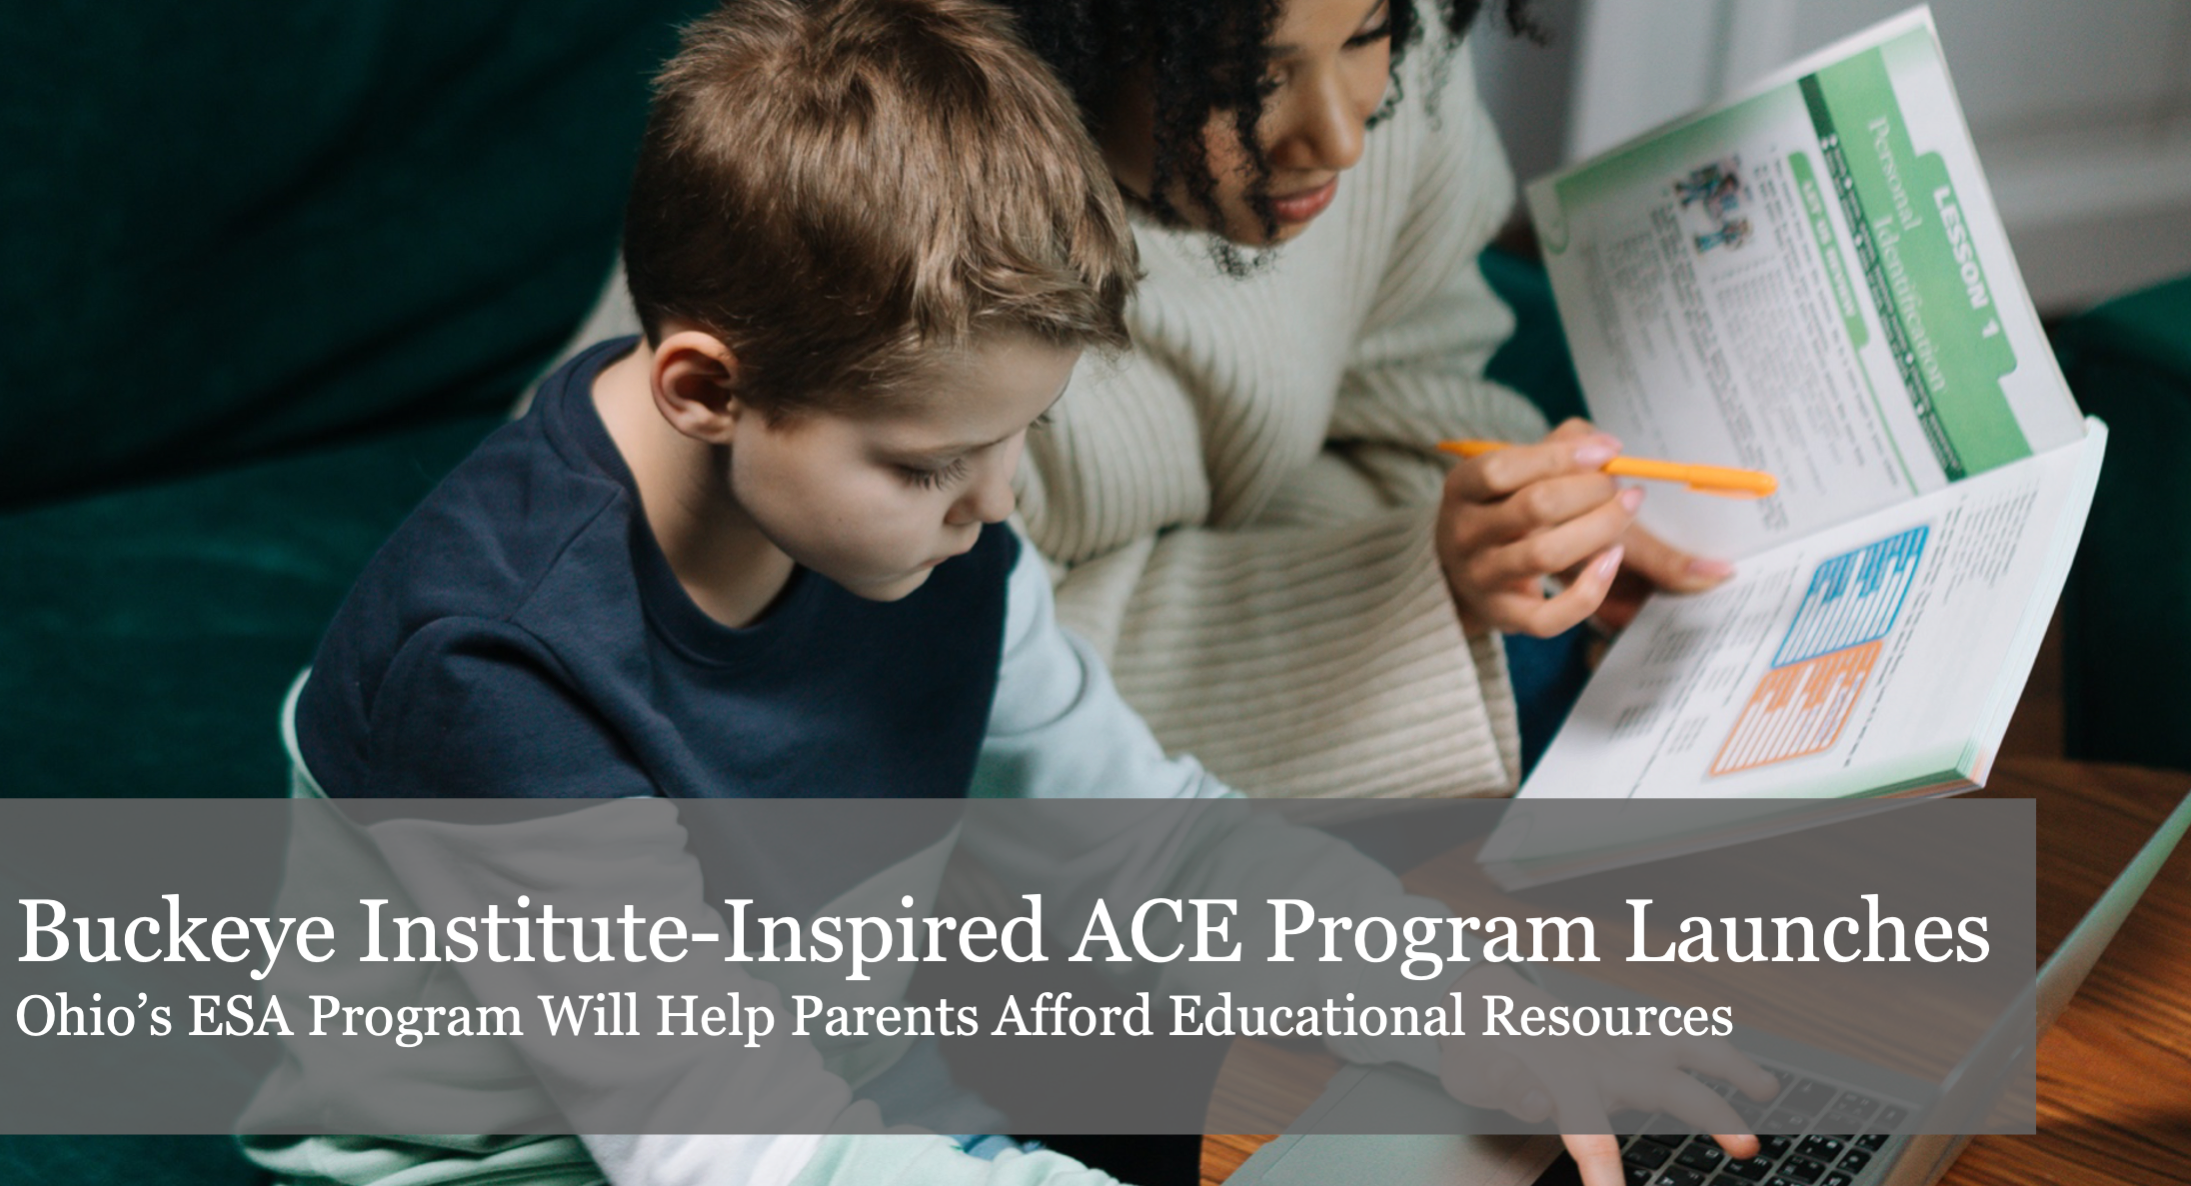 Buckeye Institute-Inspired ACE Program Launches